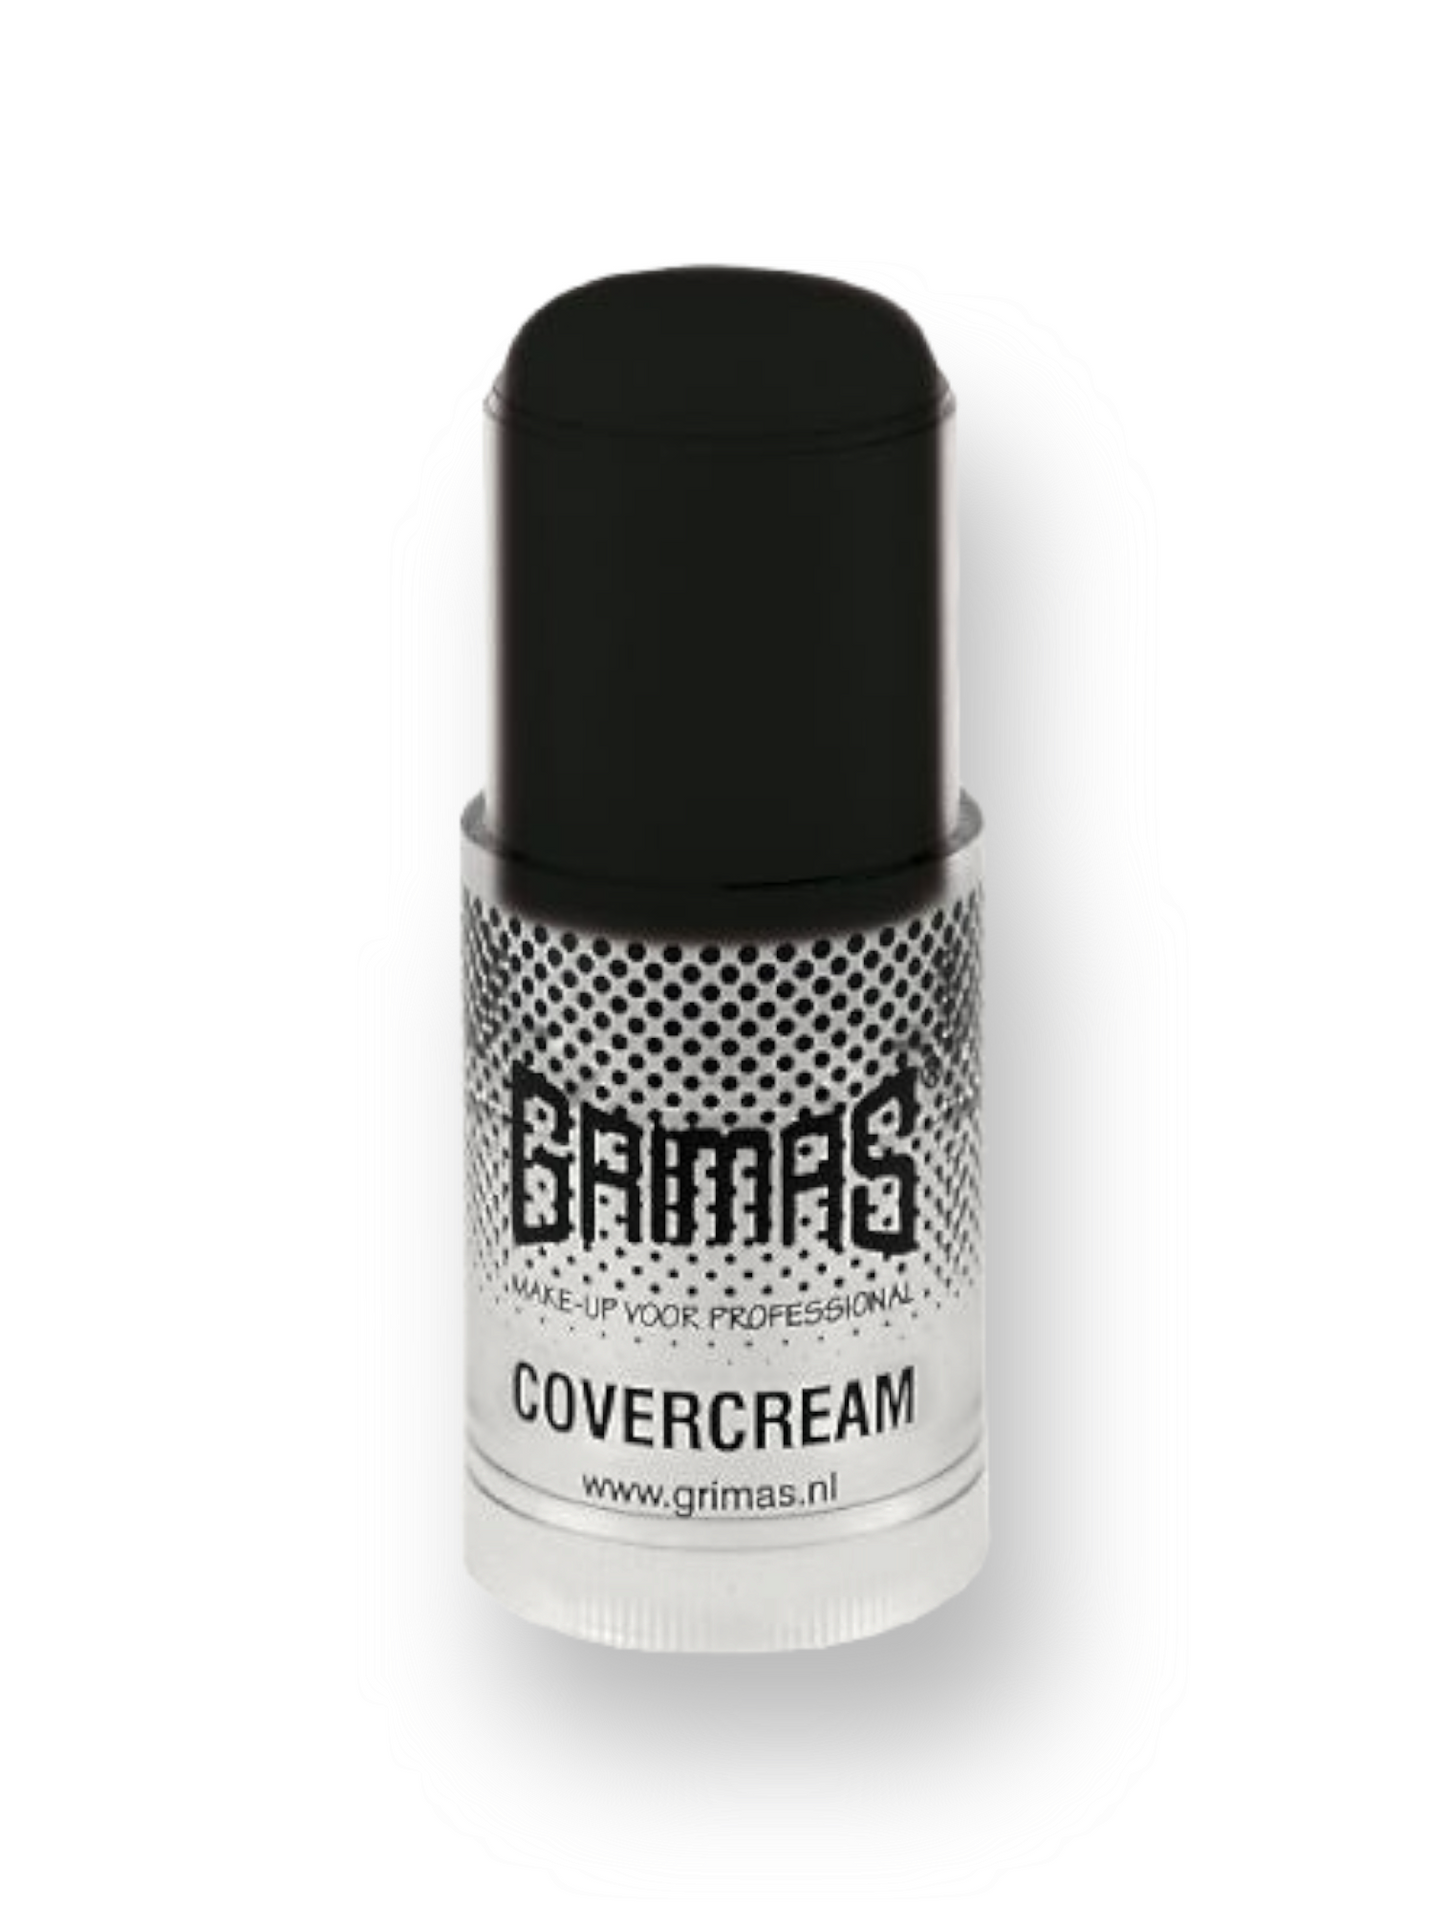 GRIMAS Cover Cream meikkivoidepuikko 101 musta